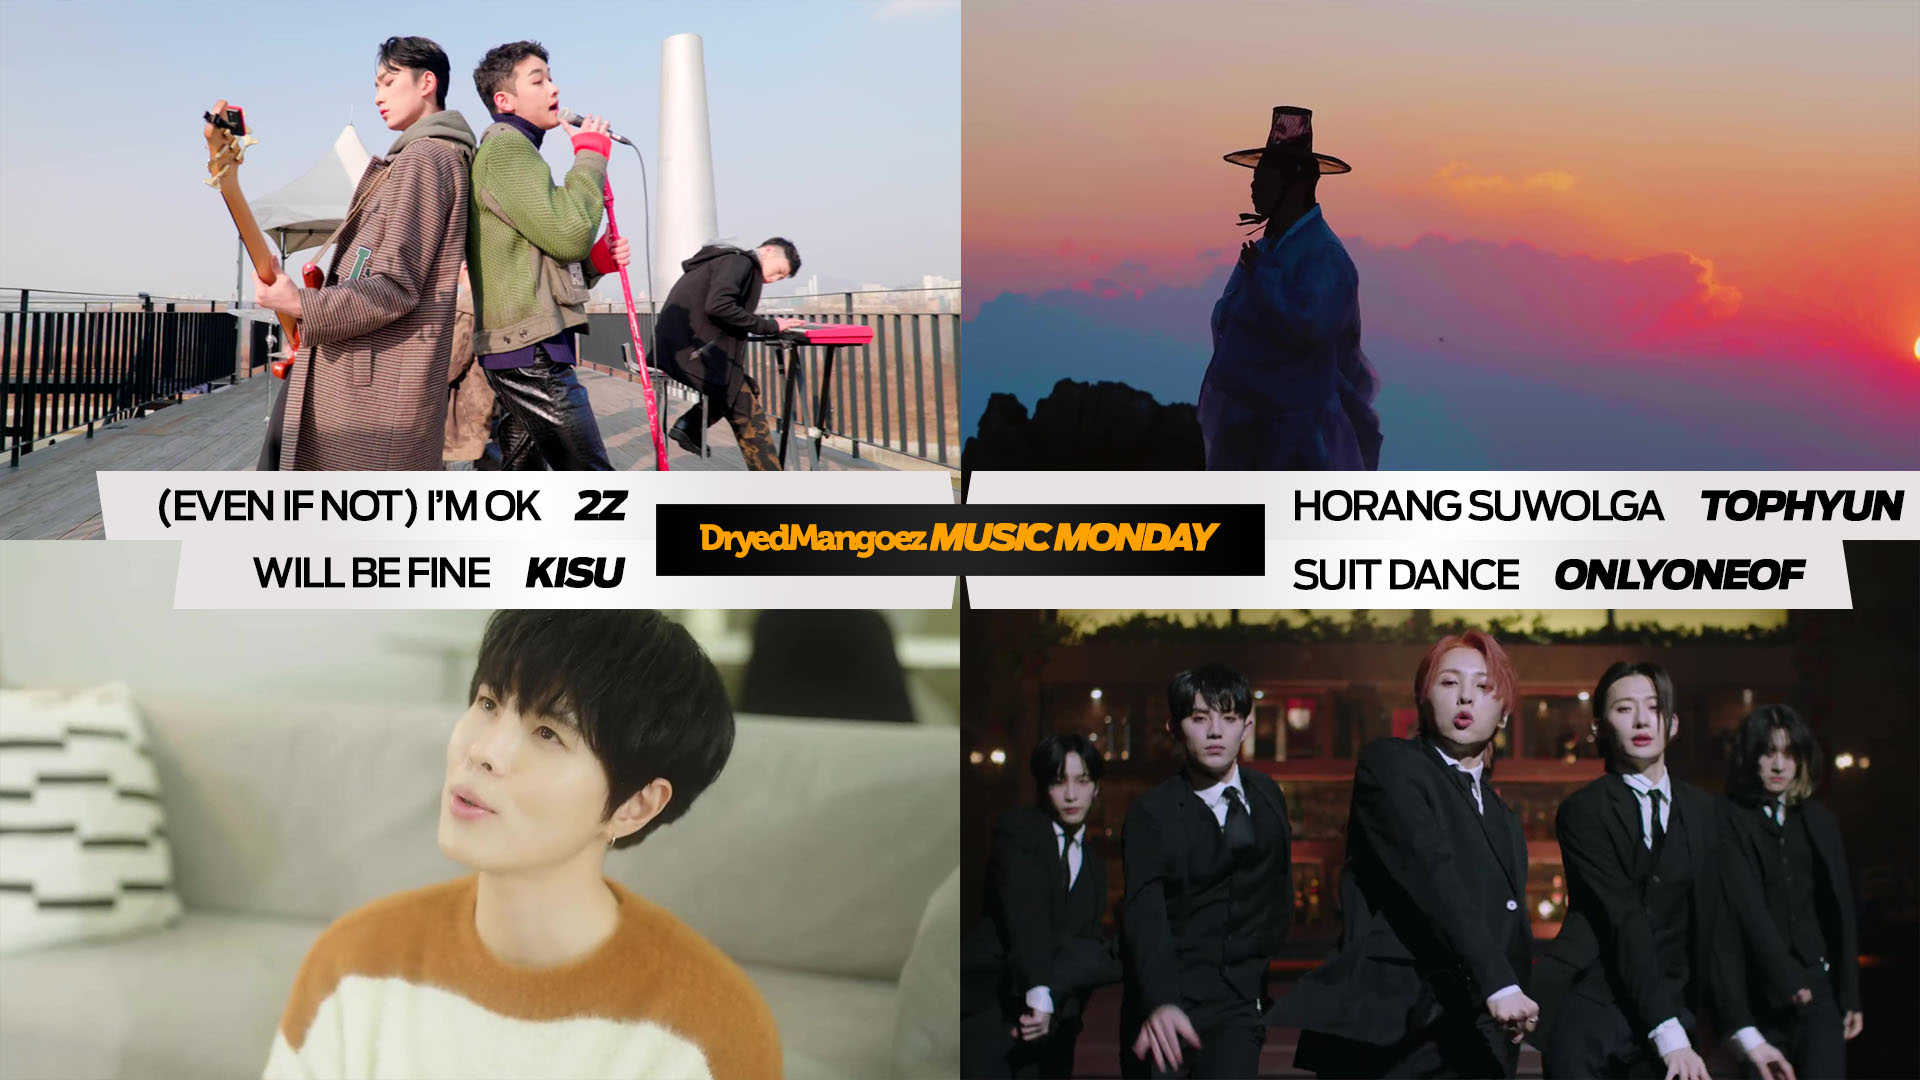 Music Monday, February 7, 2022 (Part 1) – 2Z, Tophyun, KISU, OnlyOneOf